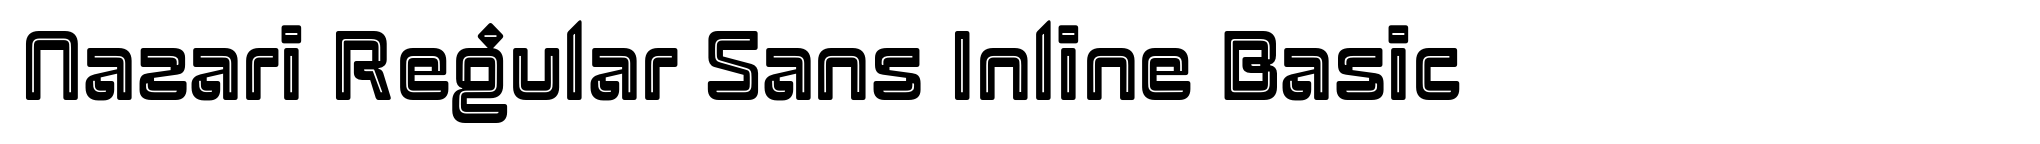 Nazari Regular Sans Inline Basic image